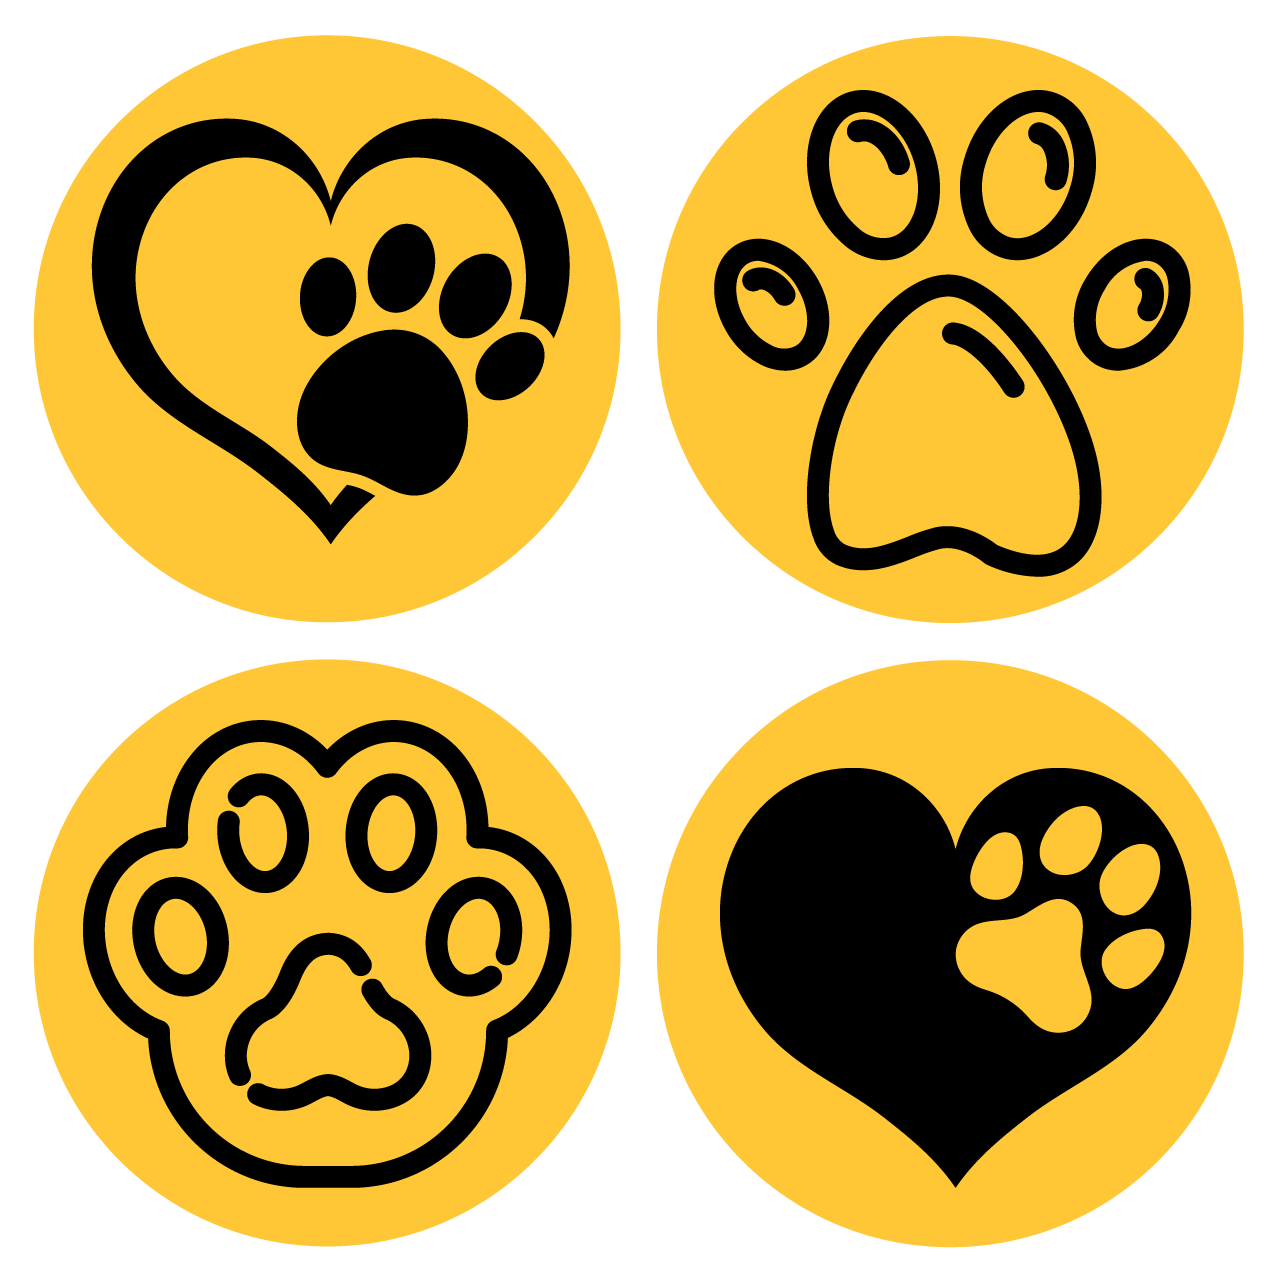 Foot clipart dog footprint designs cartoon illustration image